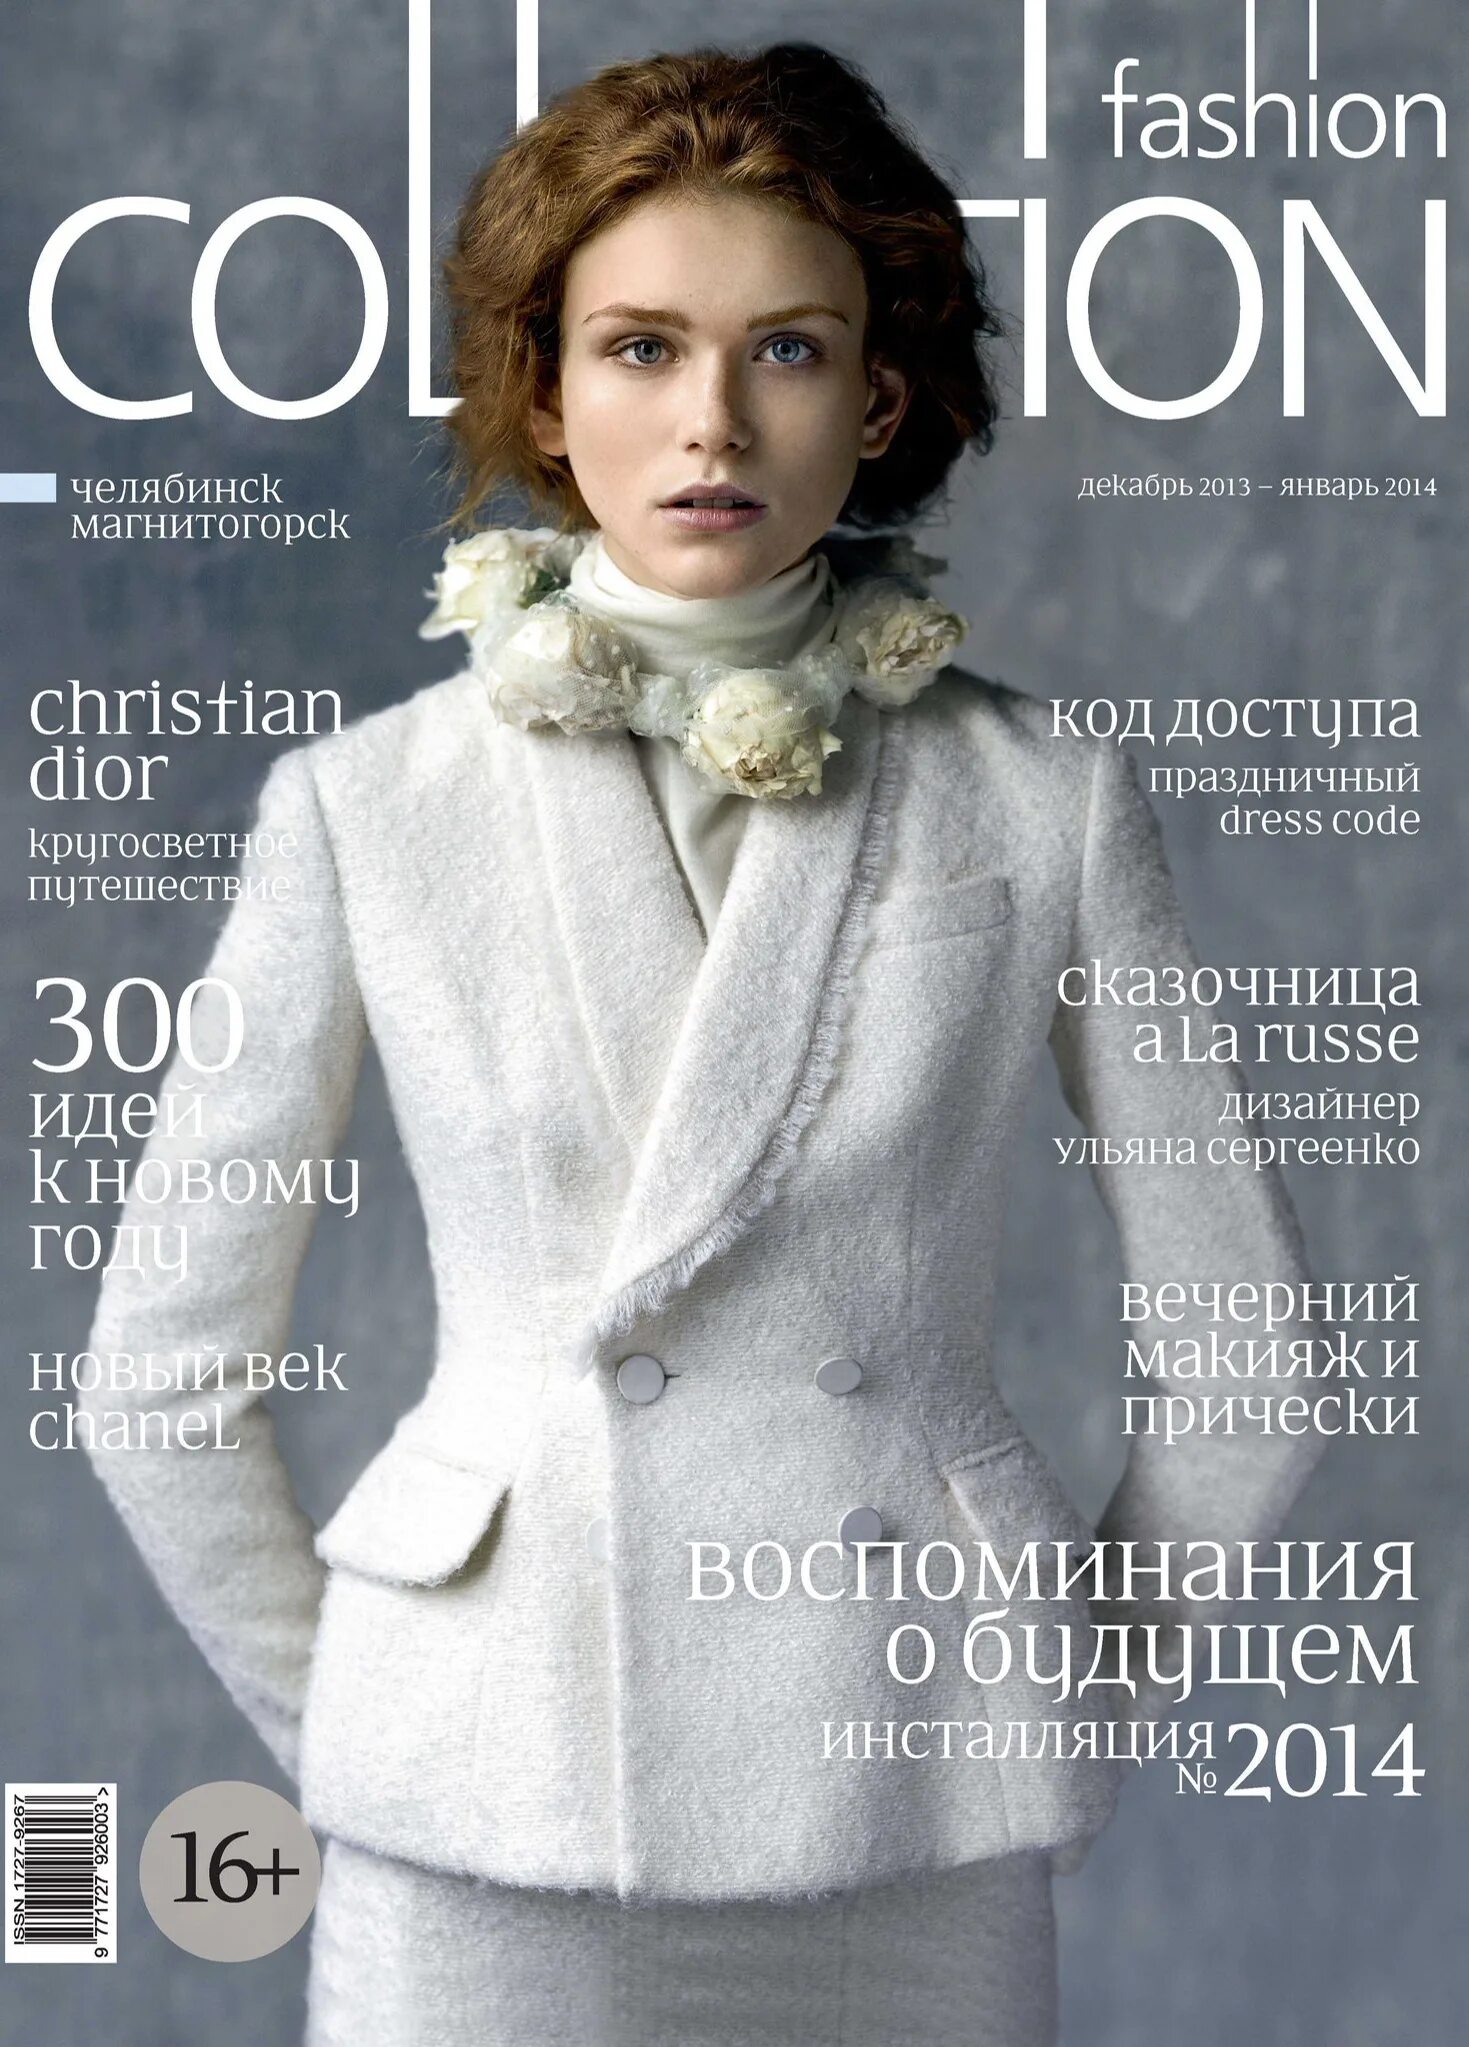 Collection журнал. Модные журналы. Журнал мод. Журнал Fashion collection. Модные журналы одежды.